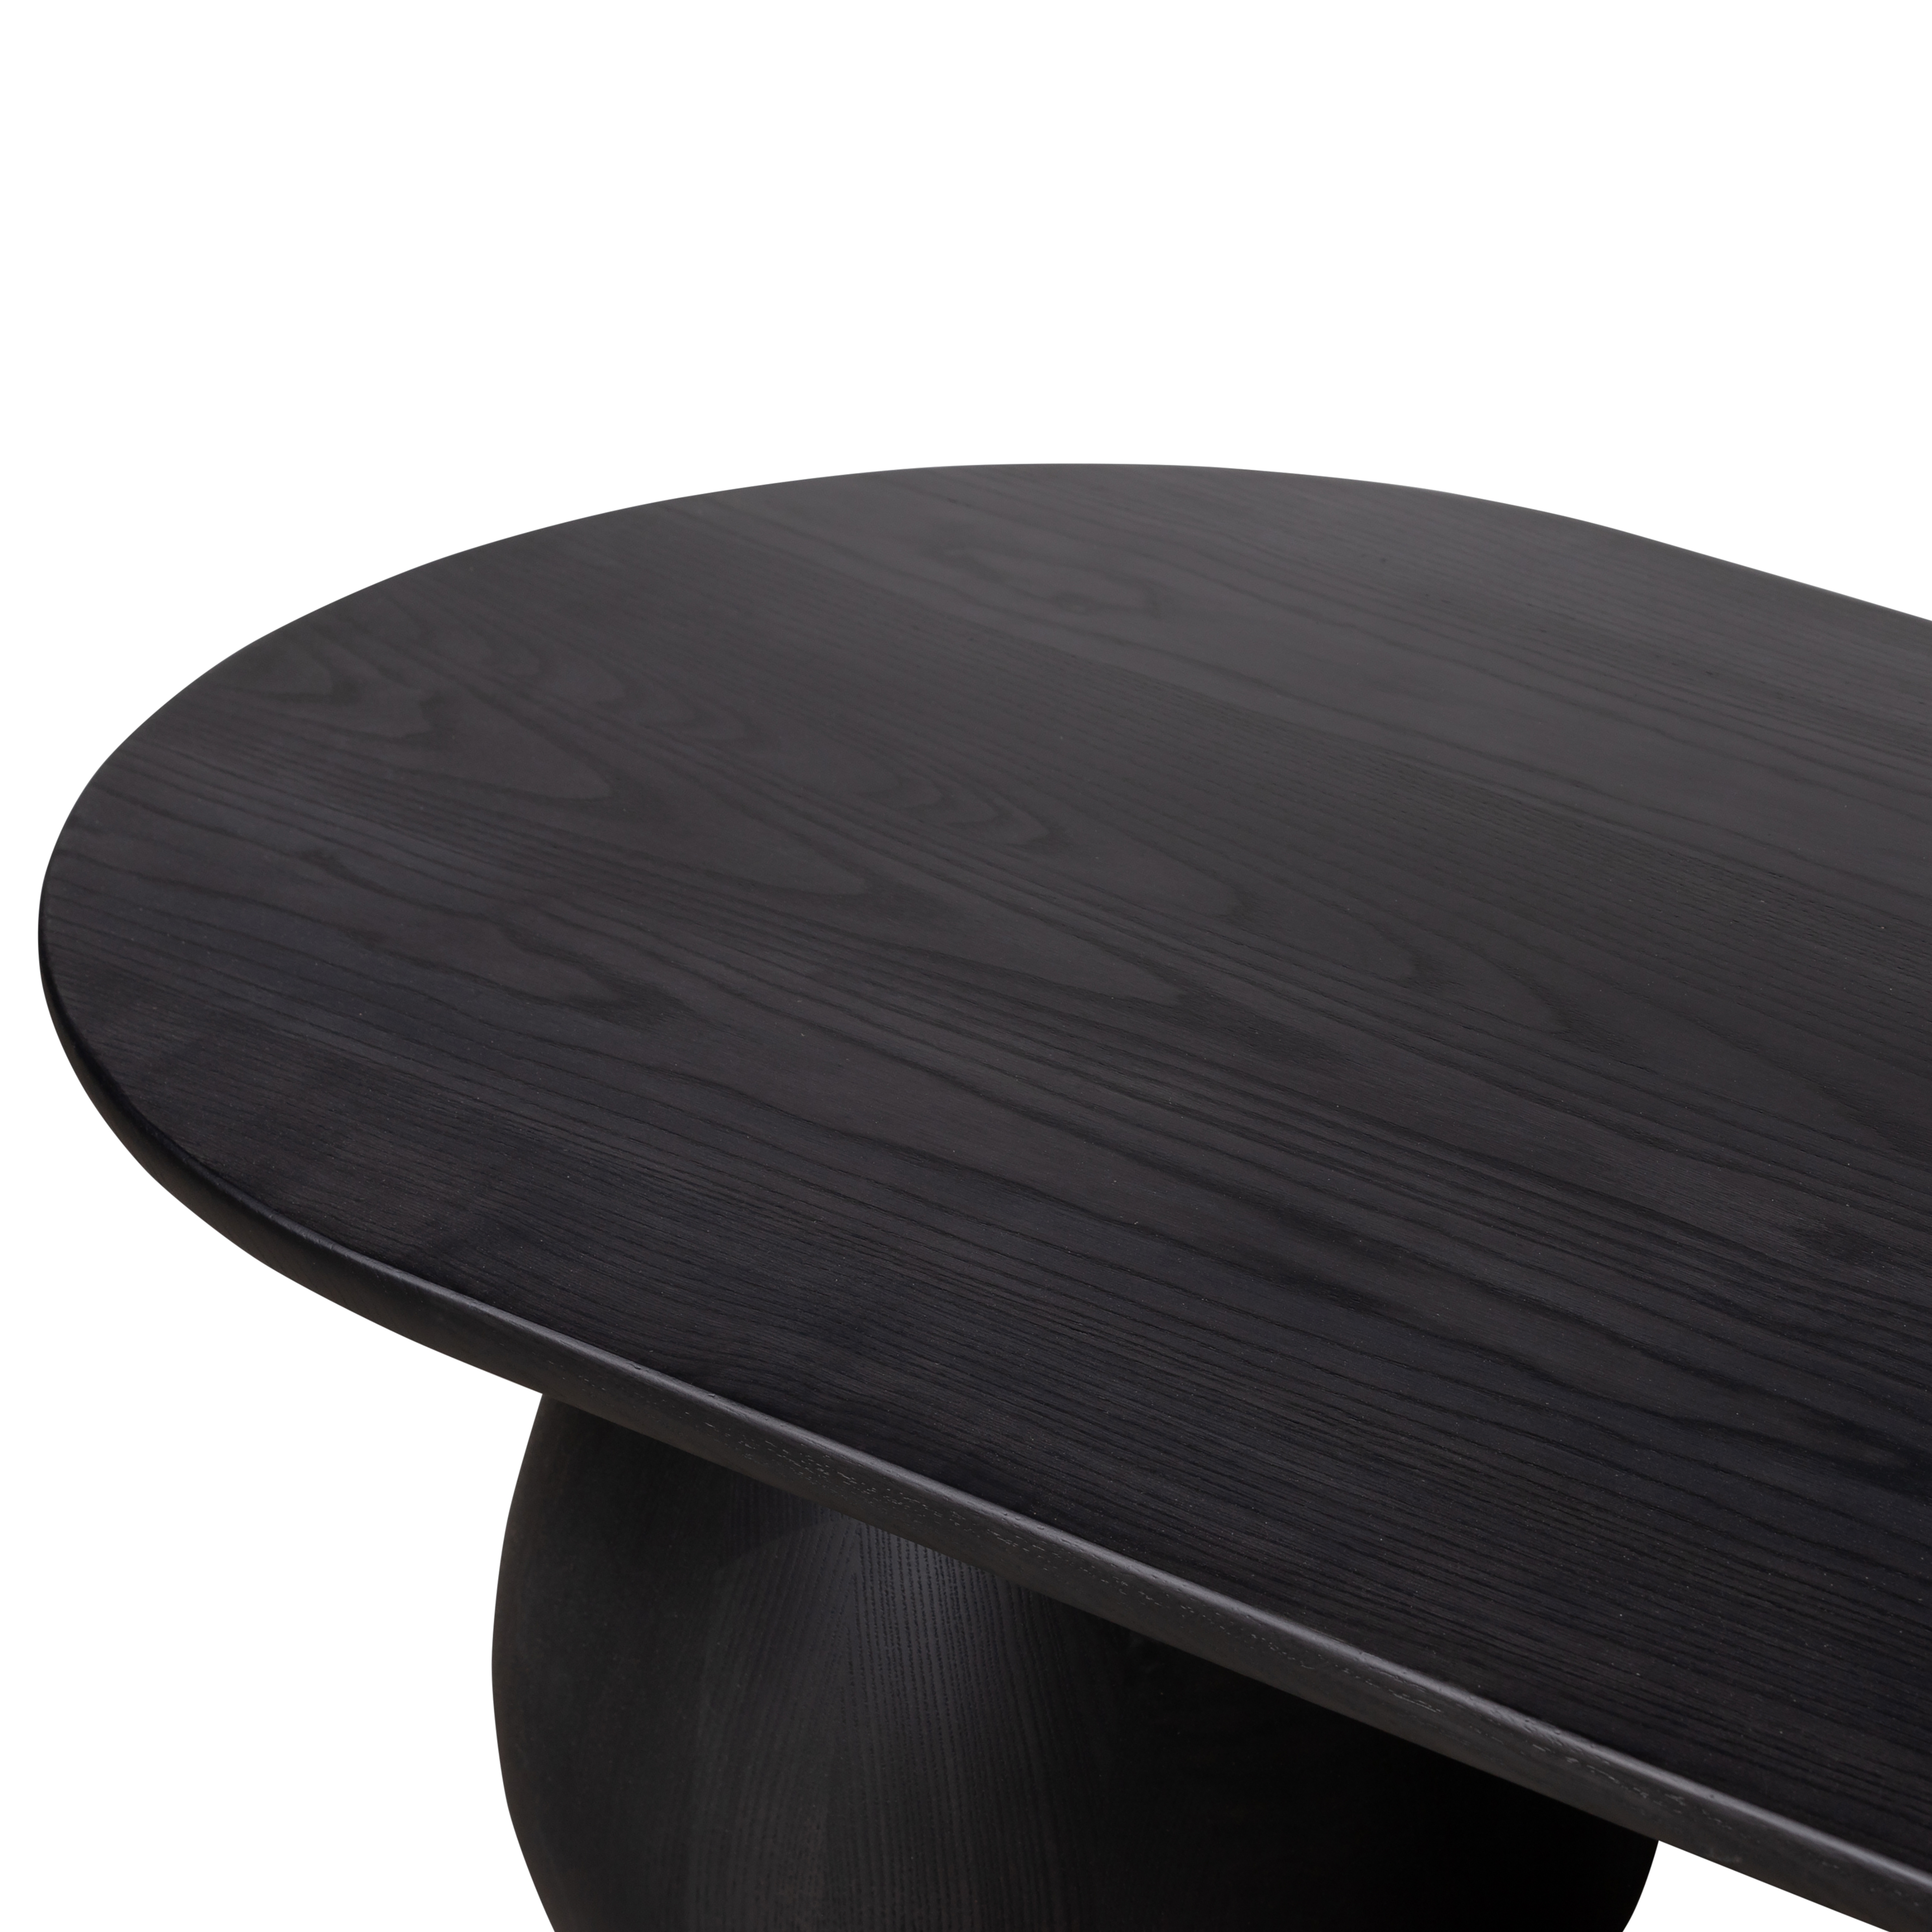 Merla Wood Coffee Table-Black Wash Ash - Image 4